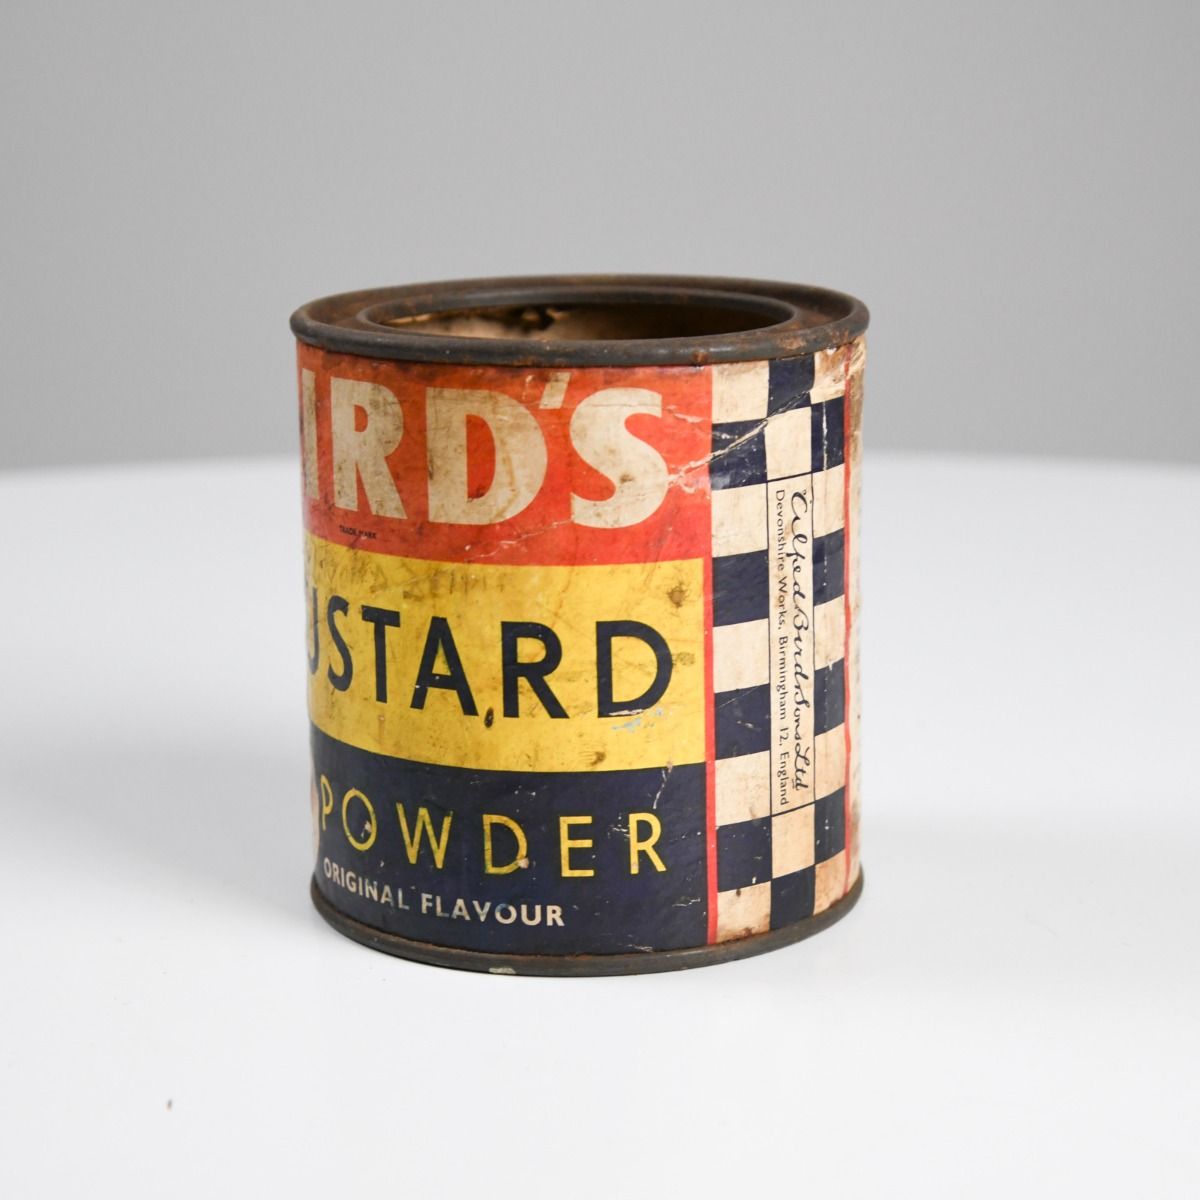 Vintage Birds Custard Powder Tin